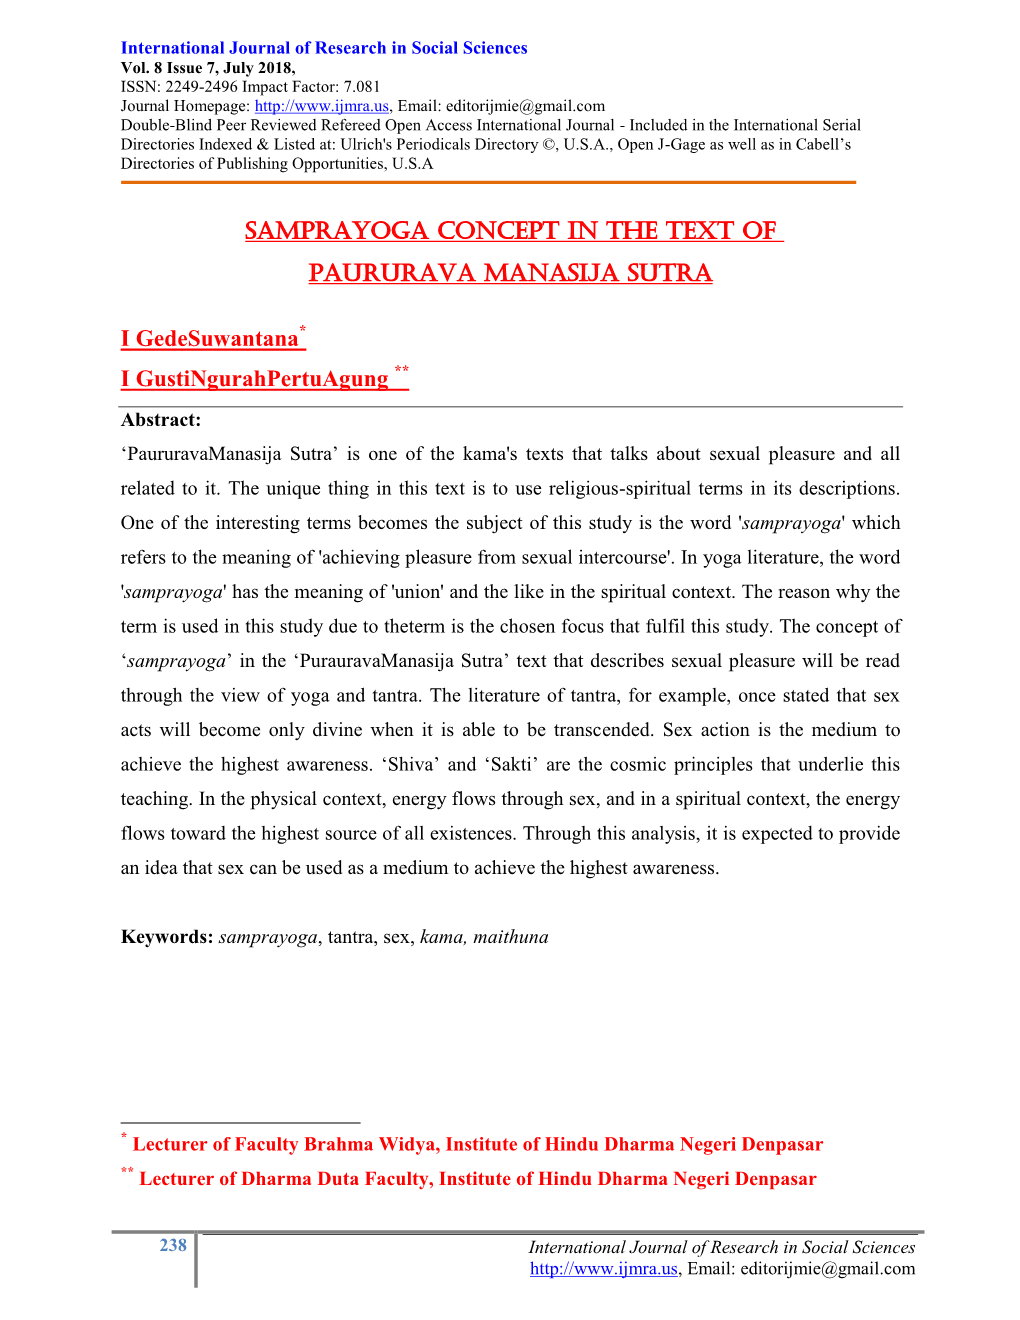 Samprayoga Concept in the Text of Paururava Manasija Sutra